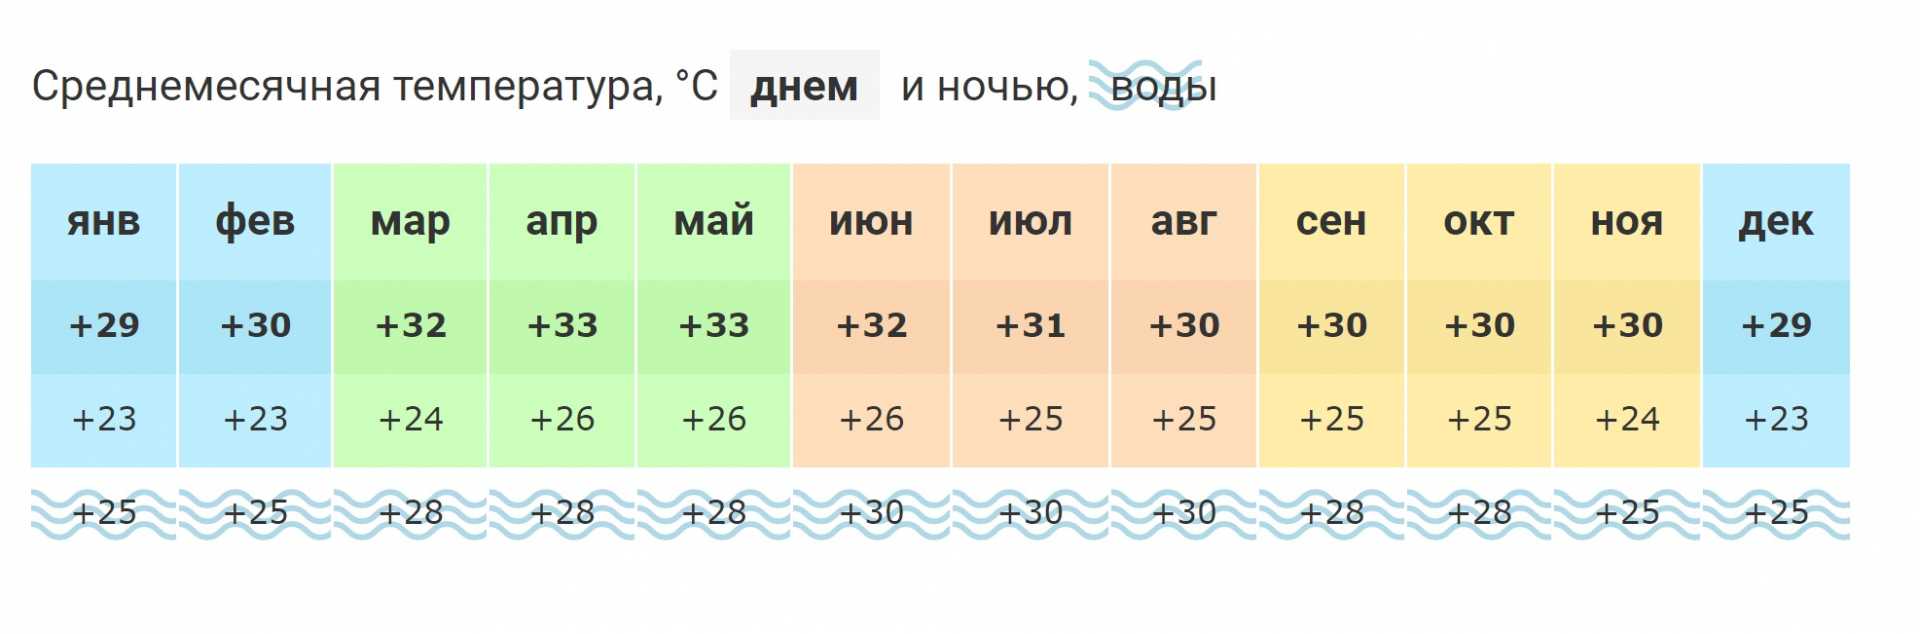 Хургада погода на месяц вода. Черногория климат по месяцам. Средняя температура в Черногории по месяцам. Температура в Черногории по месяцам и температура воды. Черногория температура по месяцам.